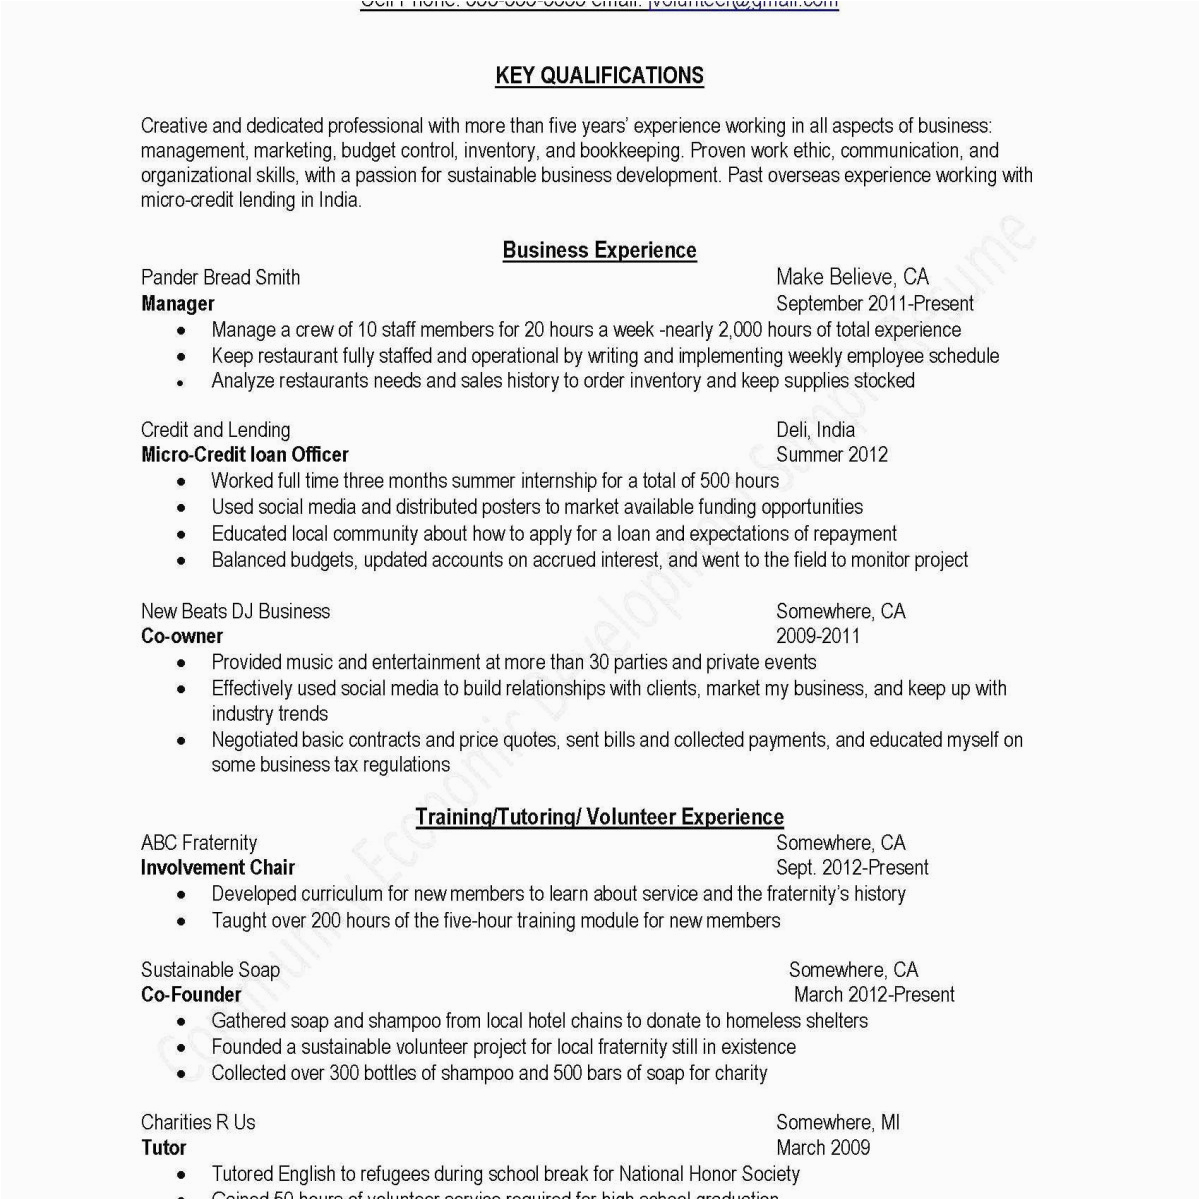 Sample Resume for Fresh College Graduate 10 Recent College Graduate Resume Samples